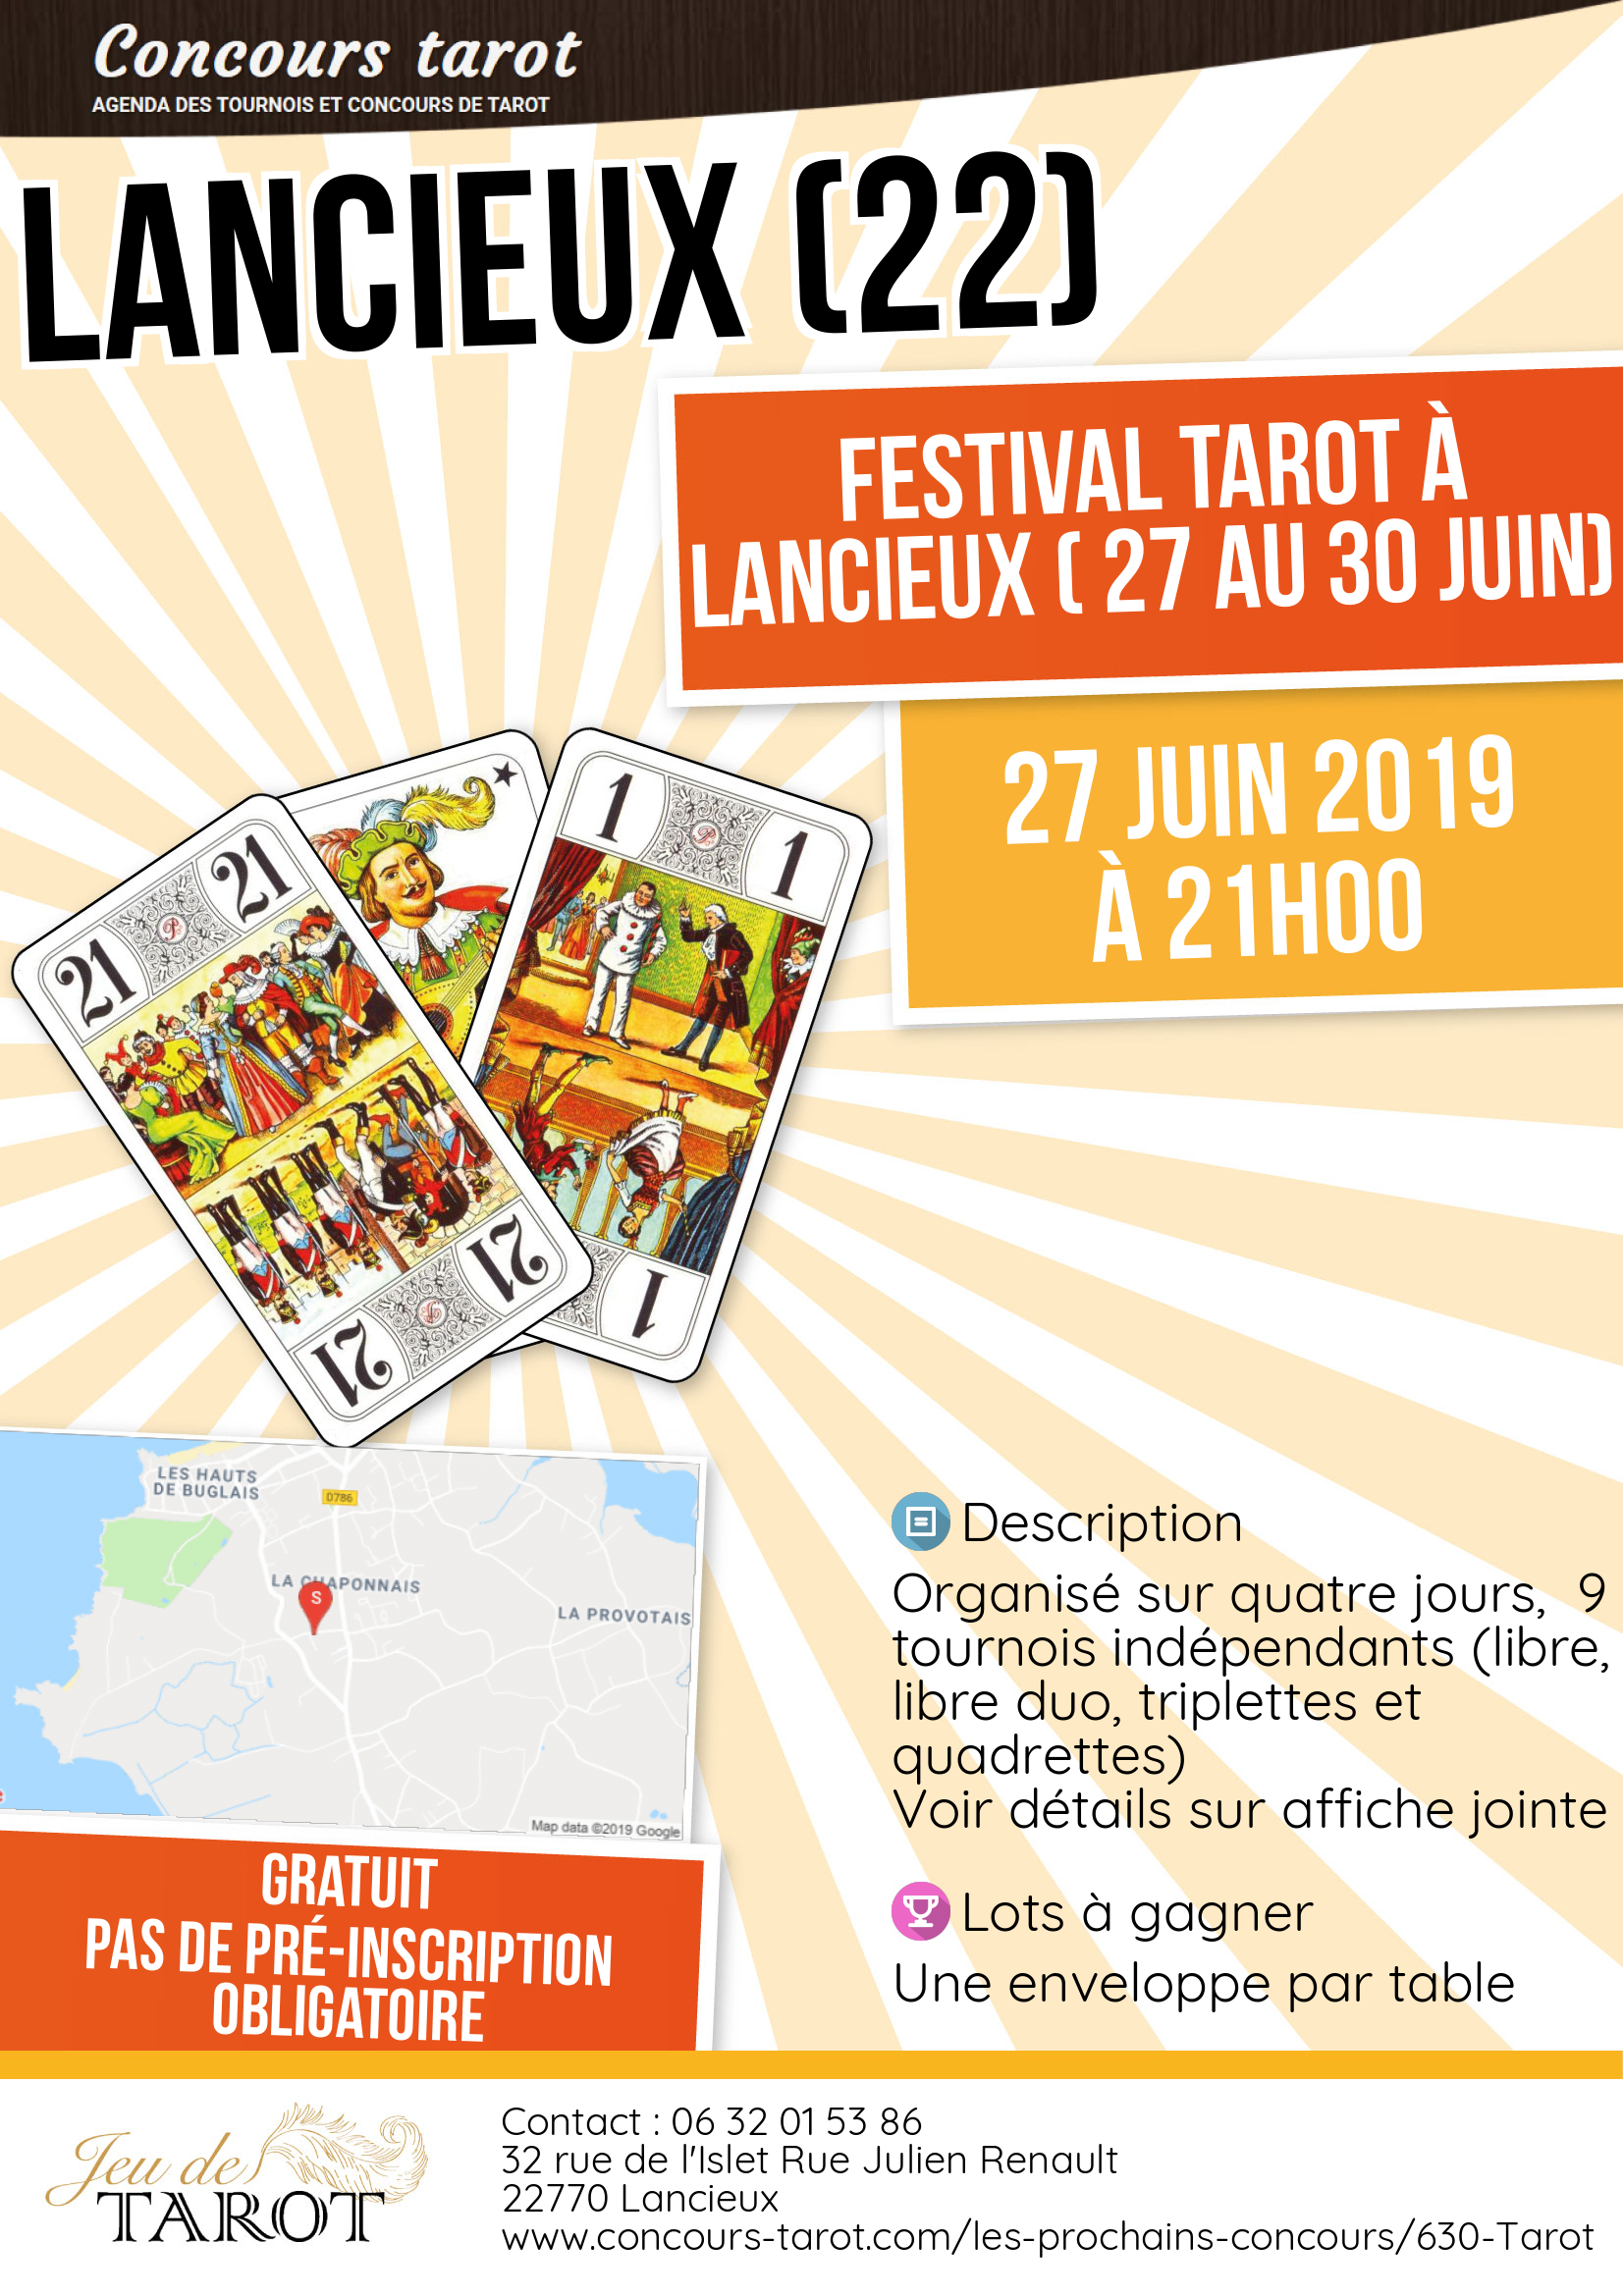 Festival Tarot a Lancieux  27 au 30 juin